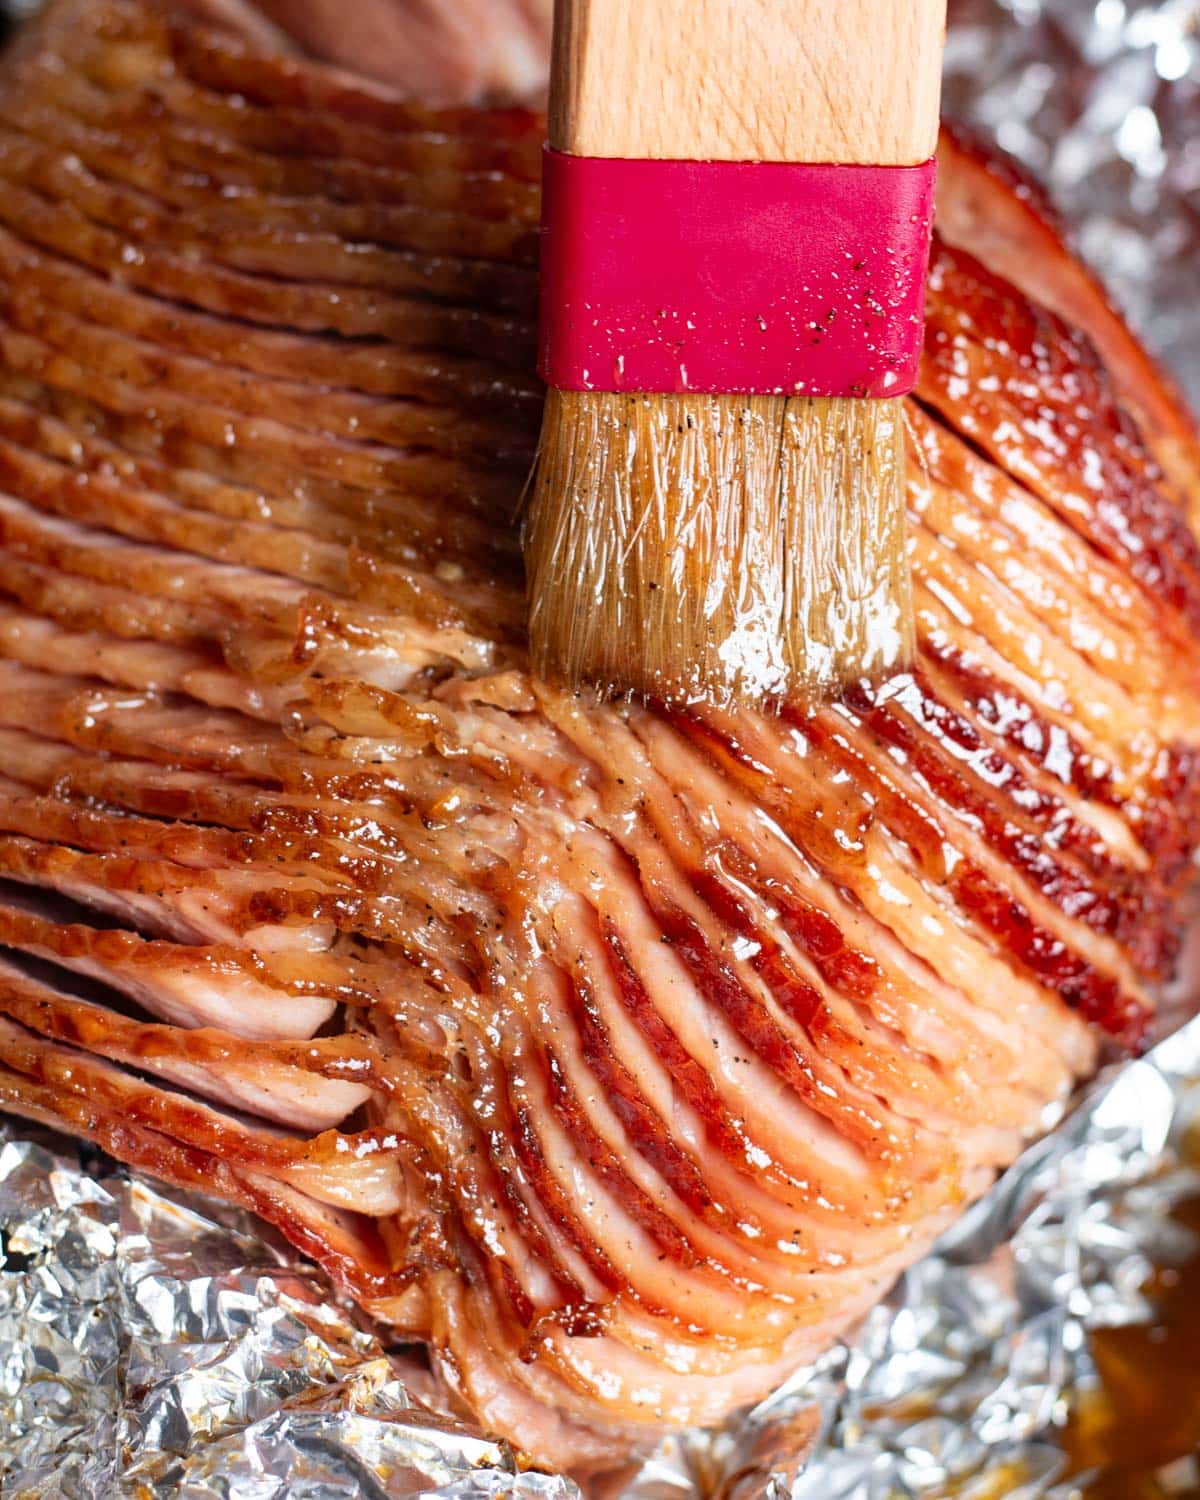 a brush brushing sweet glaze over a sliced ham